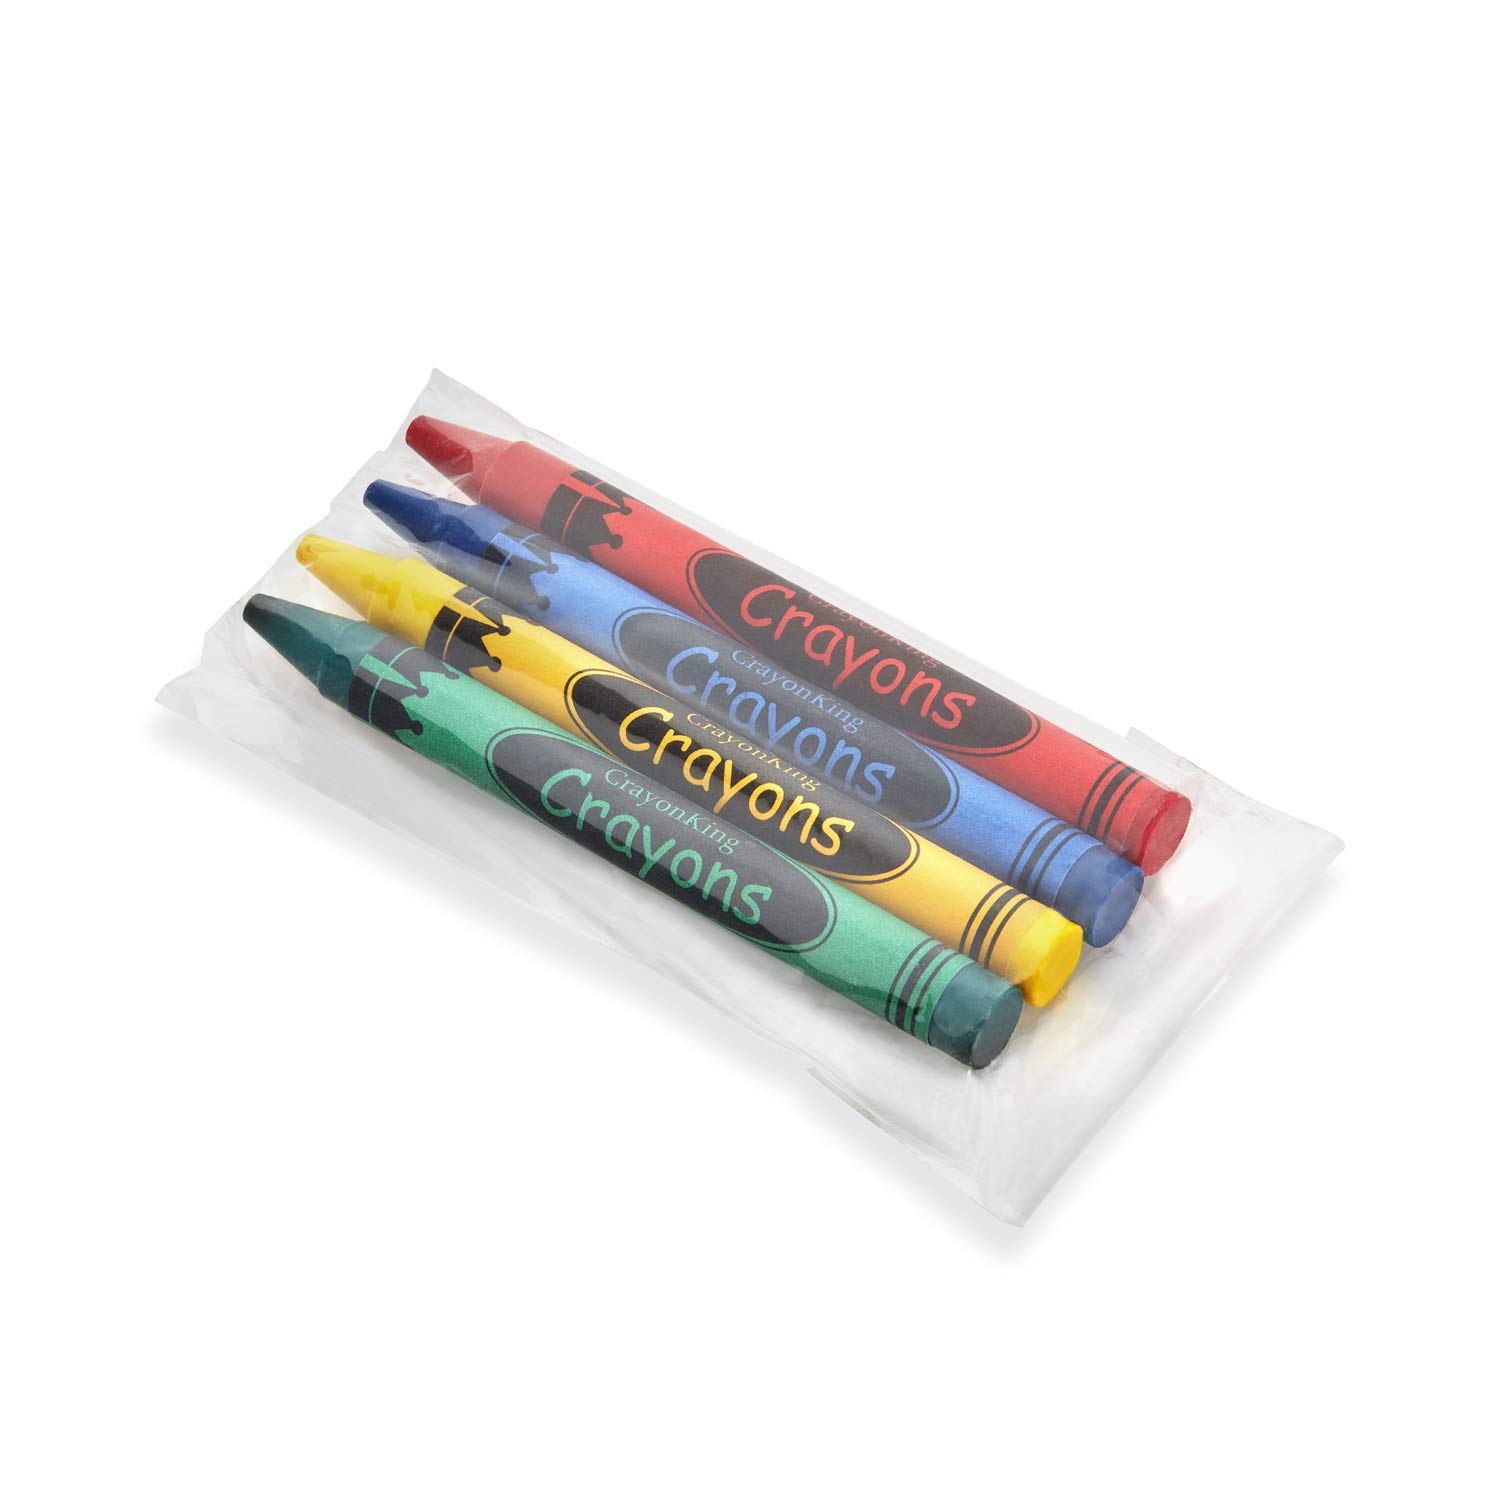 Crayonking 250 Sets Of 4-Packs In Cello (1000 Total Bulk Crayons) Restaurants, Party Favors, Birthdays, School Teachers & Kids C